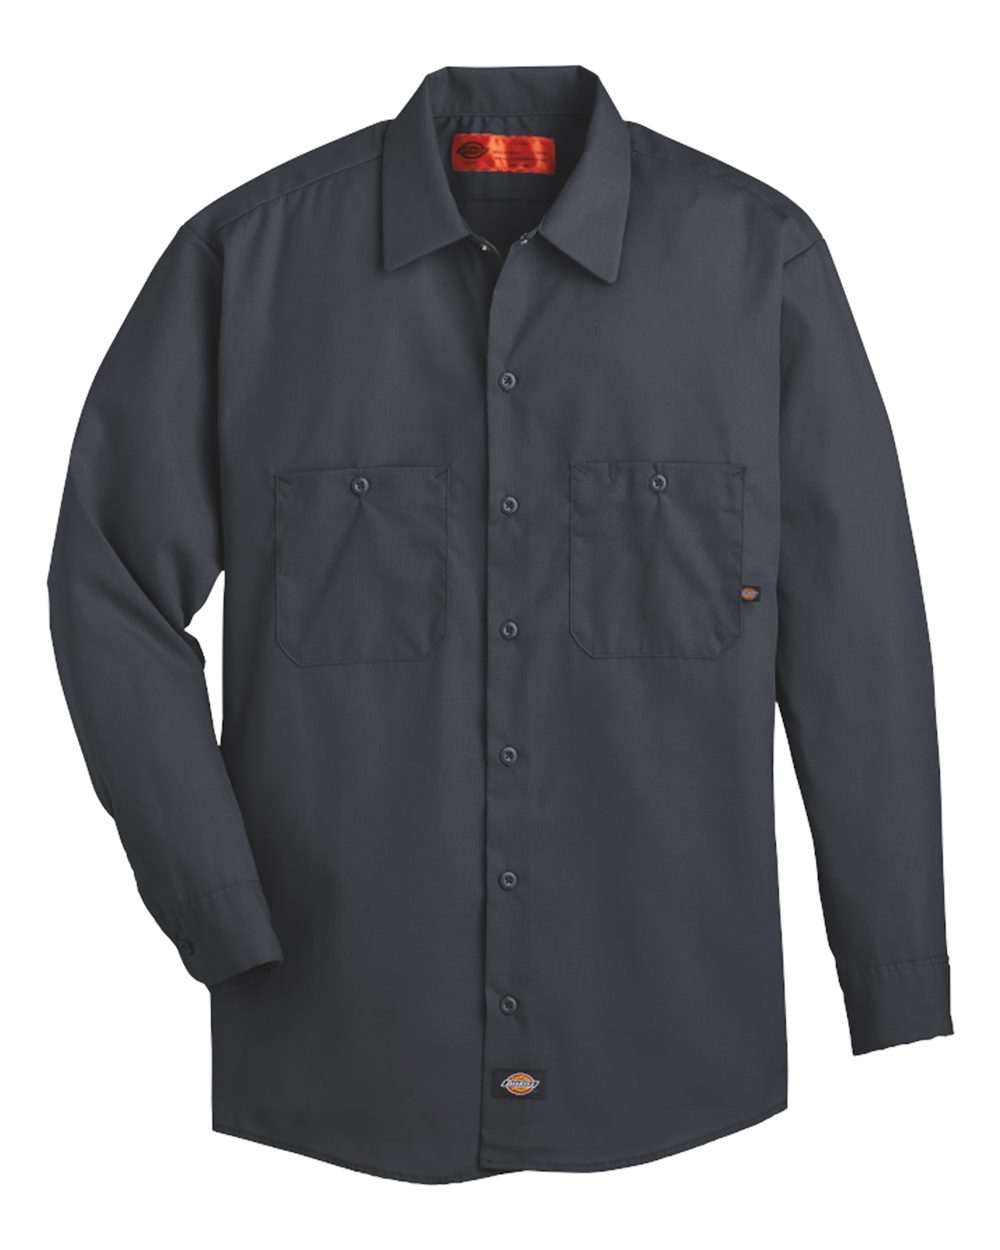 Dickies Industrial Long Sleeve Work Shirt - Walmart.com